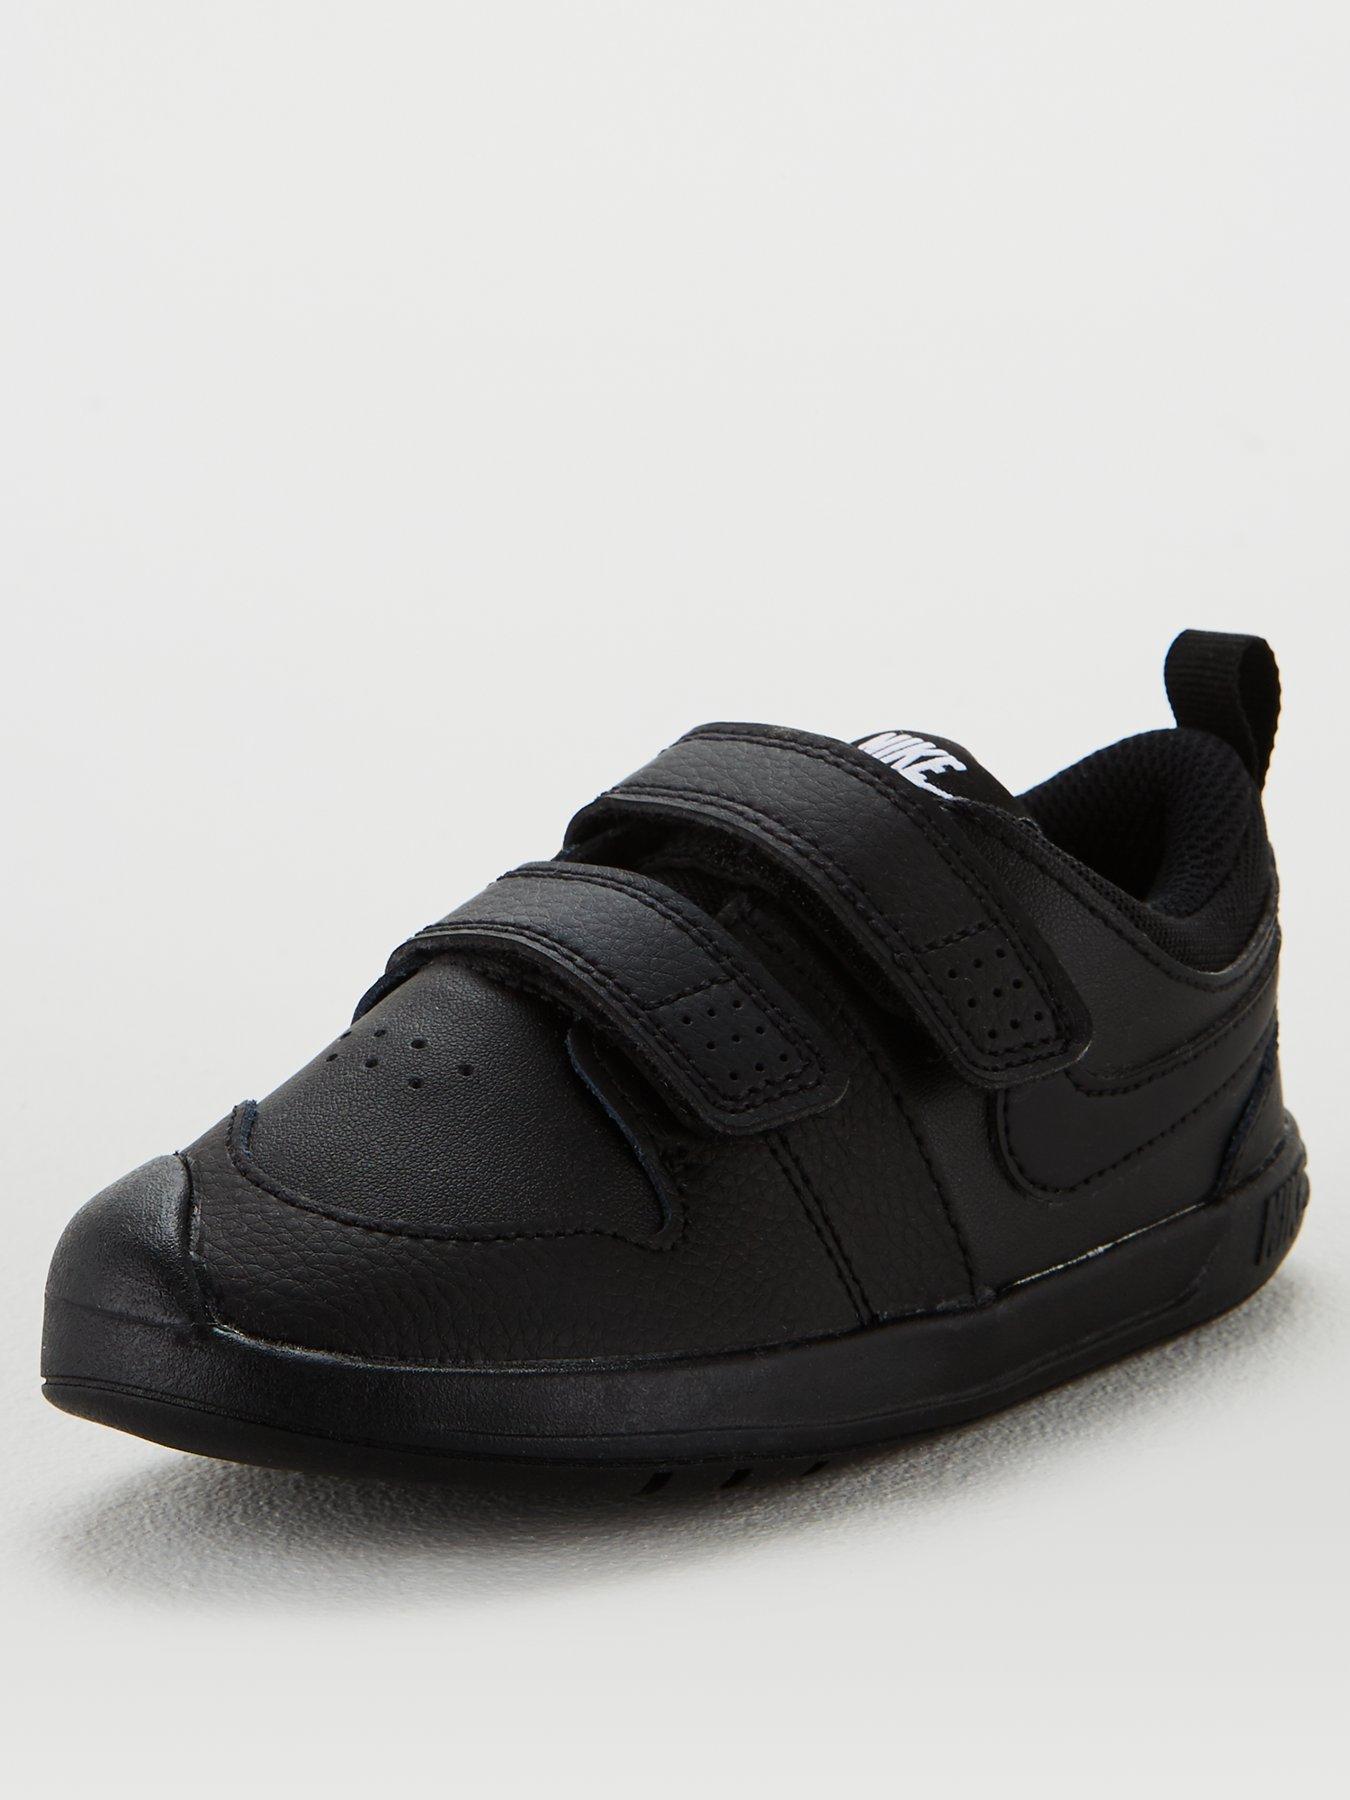 Nike Pico 5 Infant Trainers - Black 